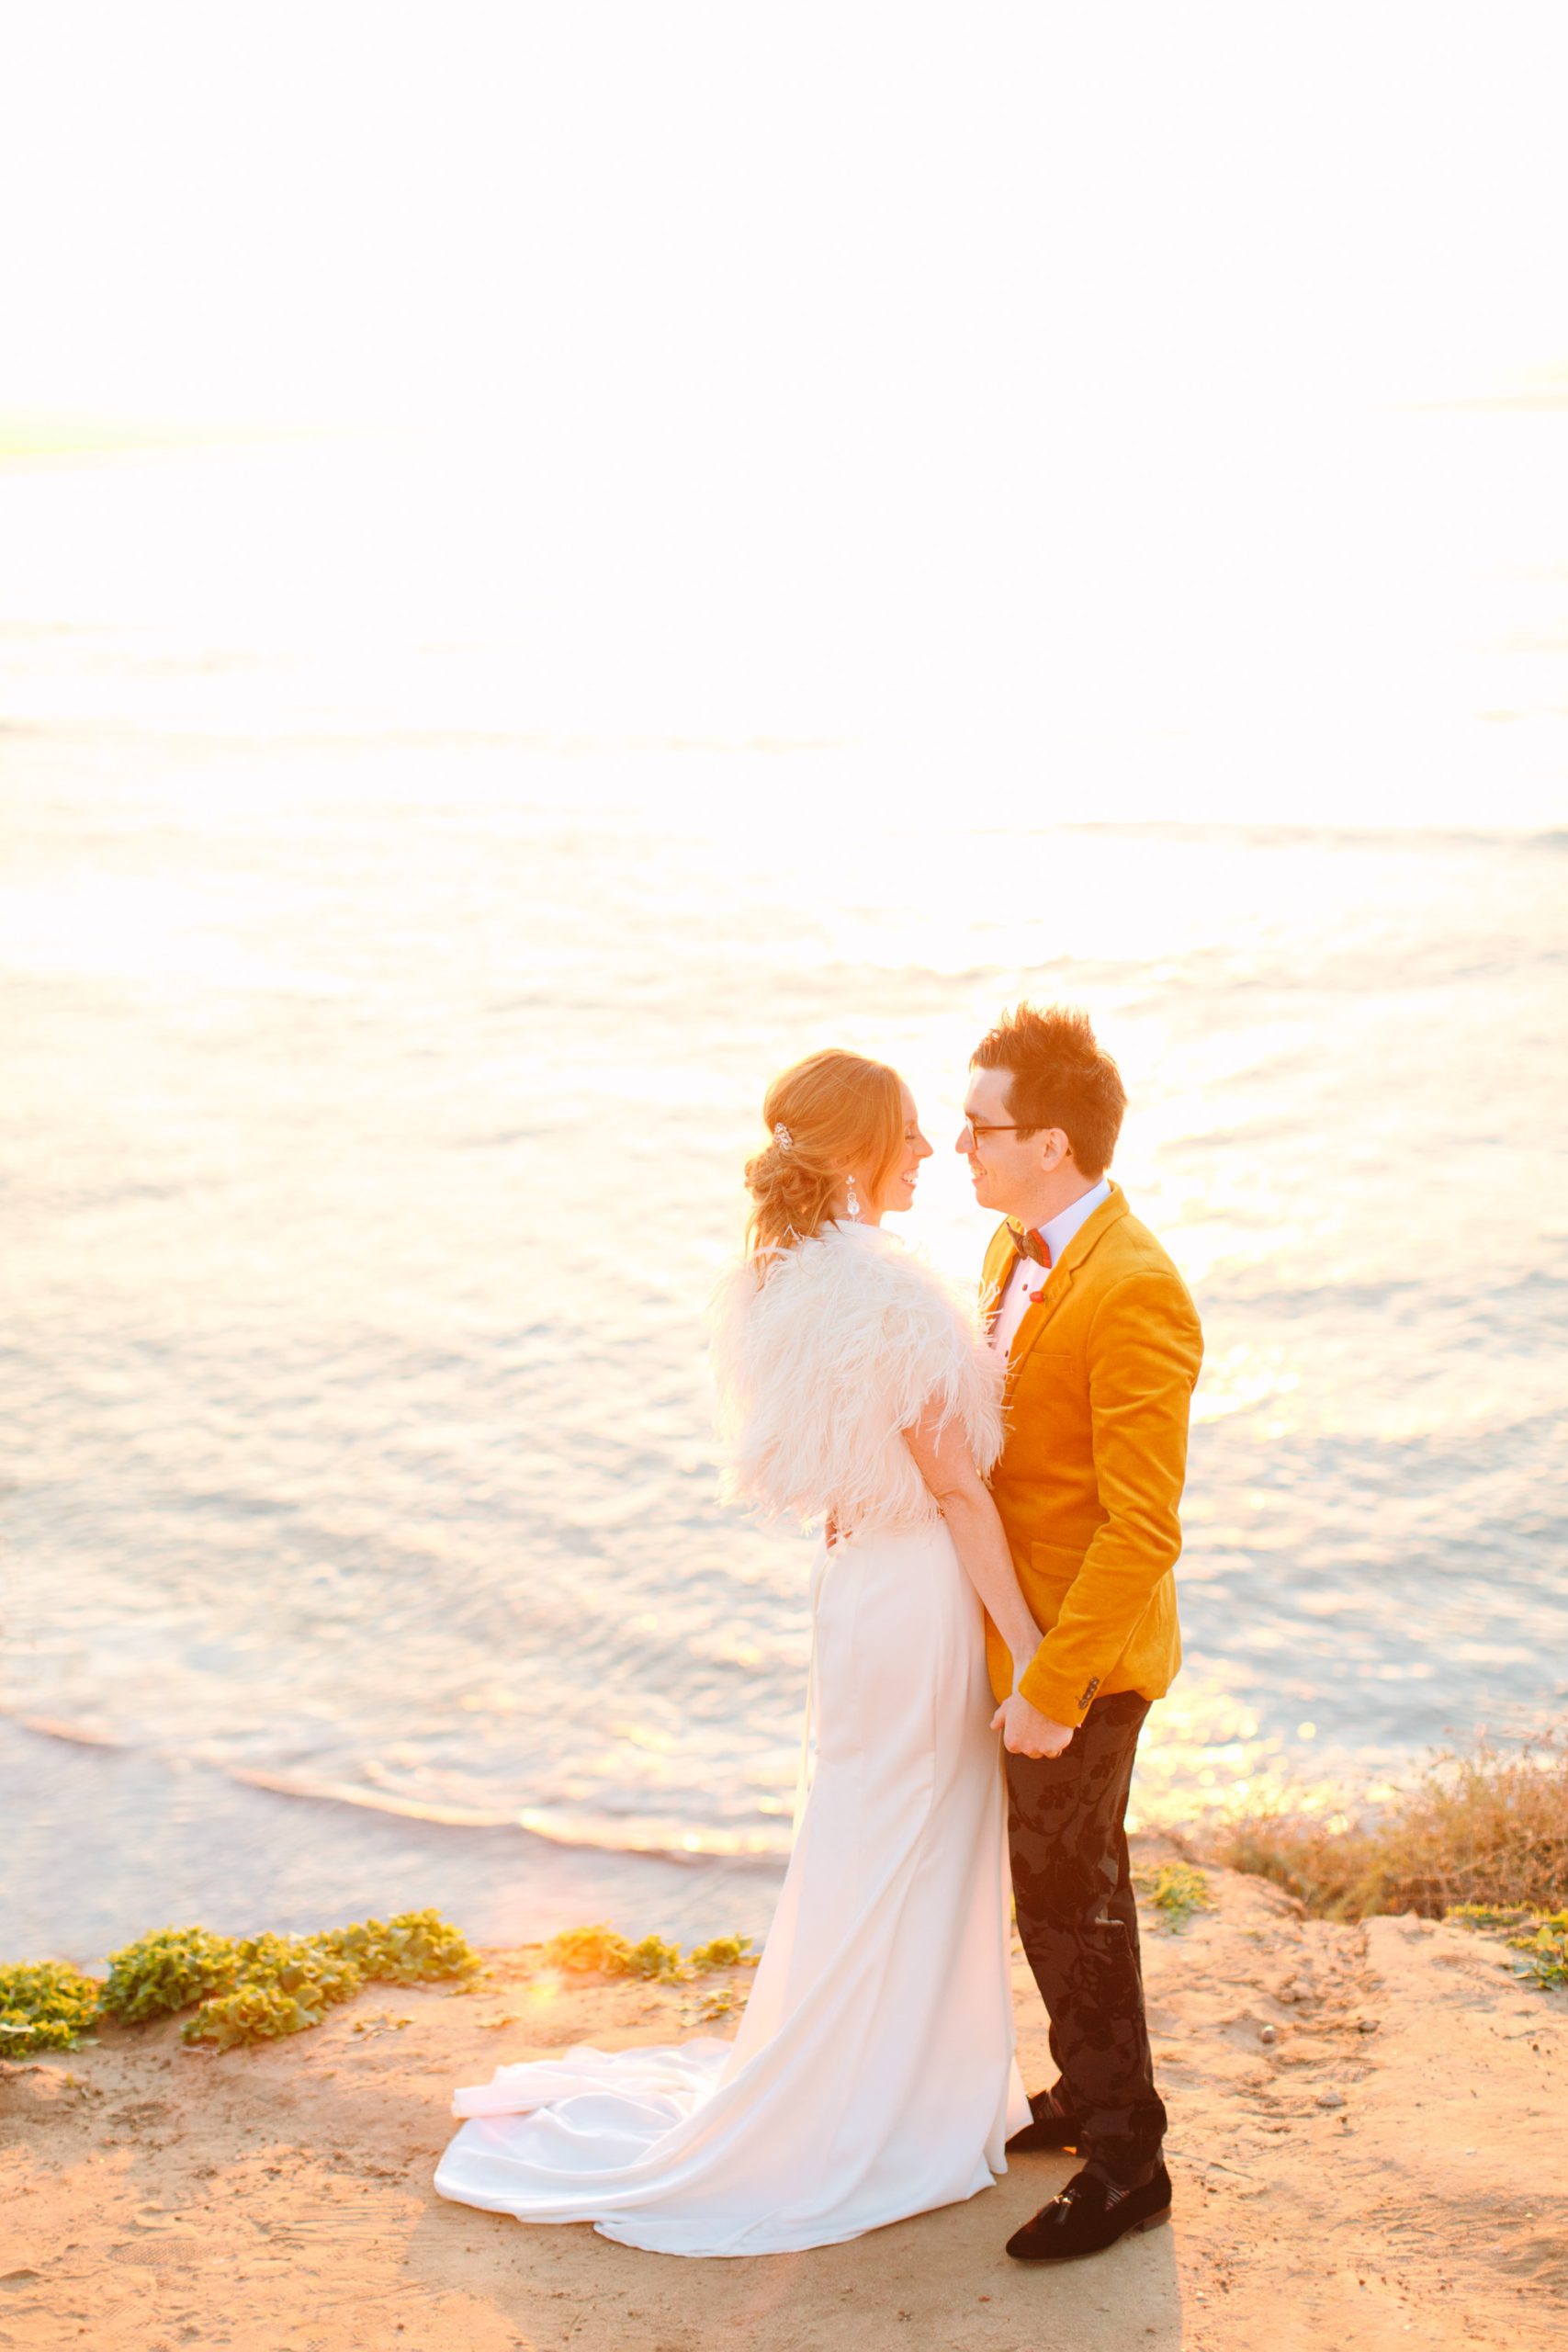 Bride and groom at beach sunset - www.marycostaweddings.com